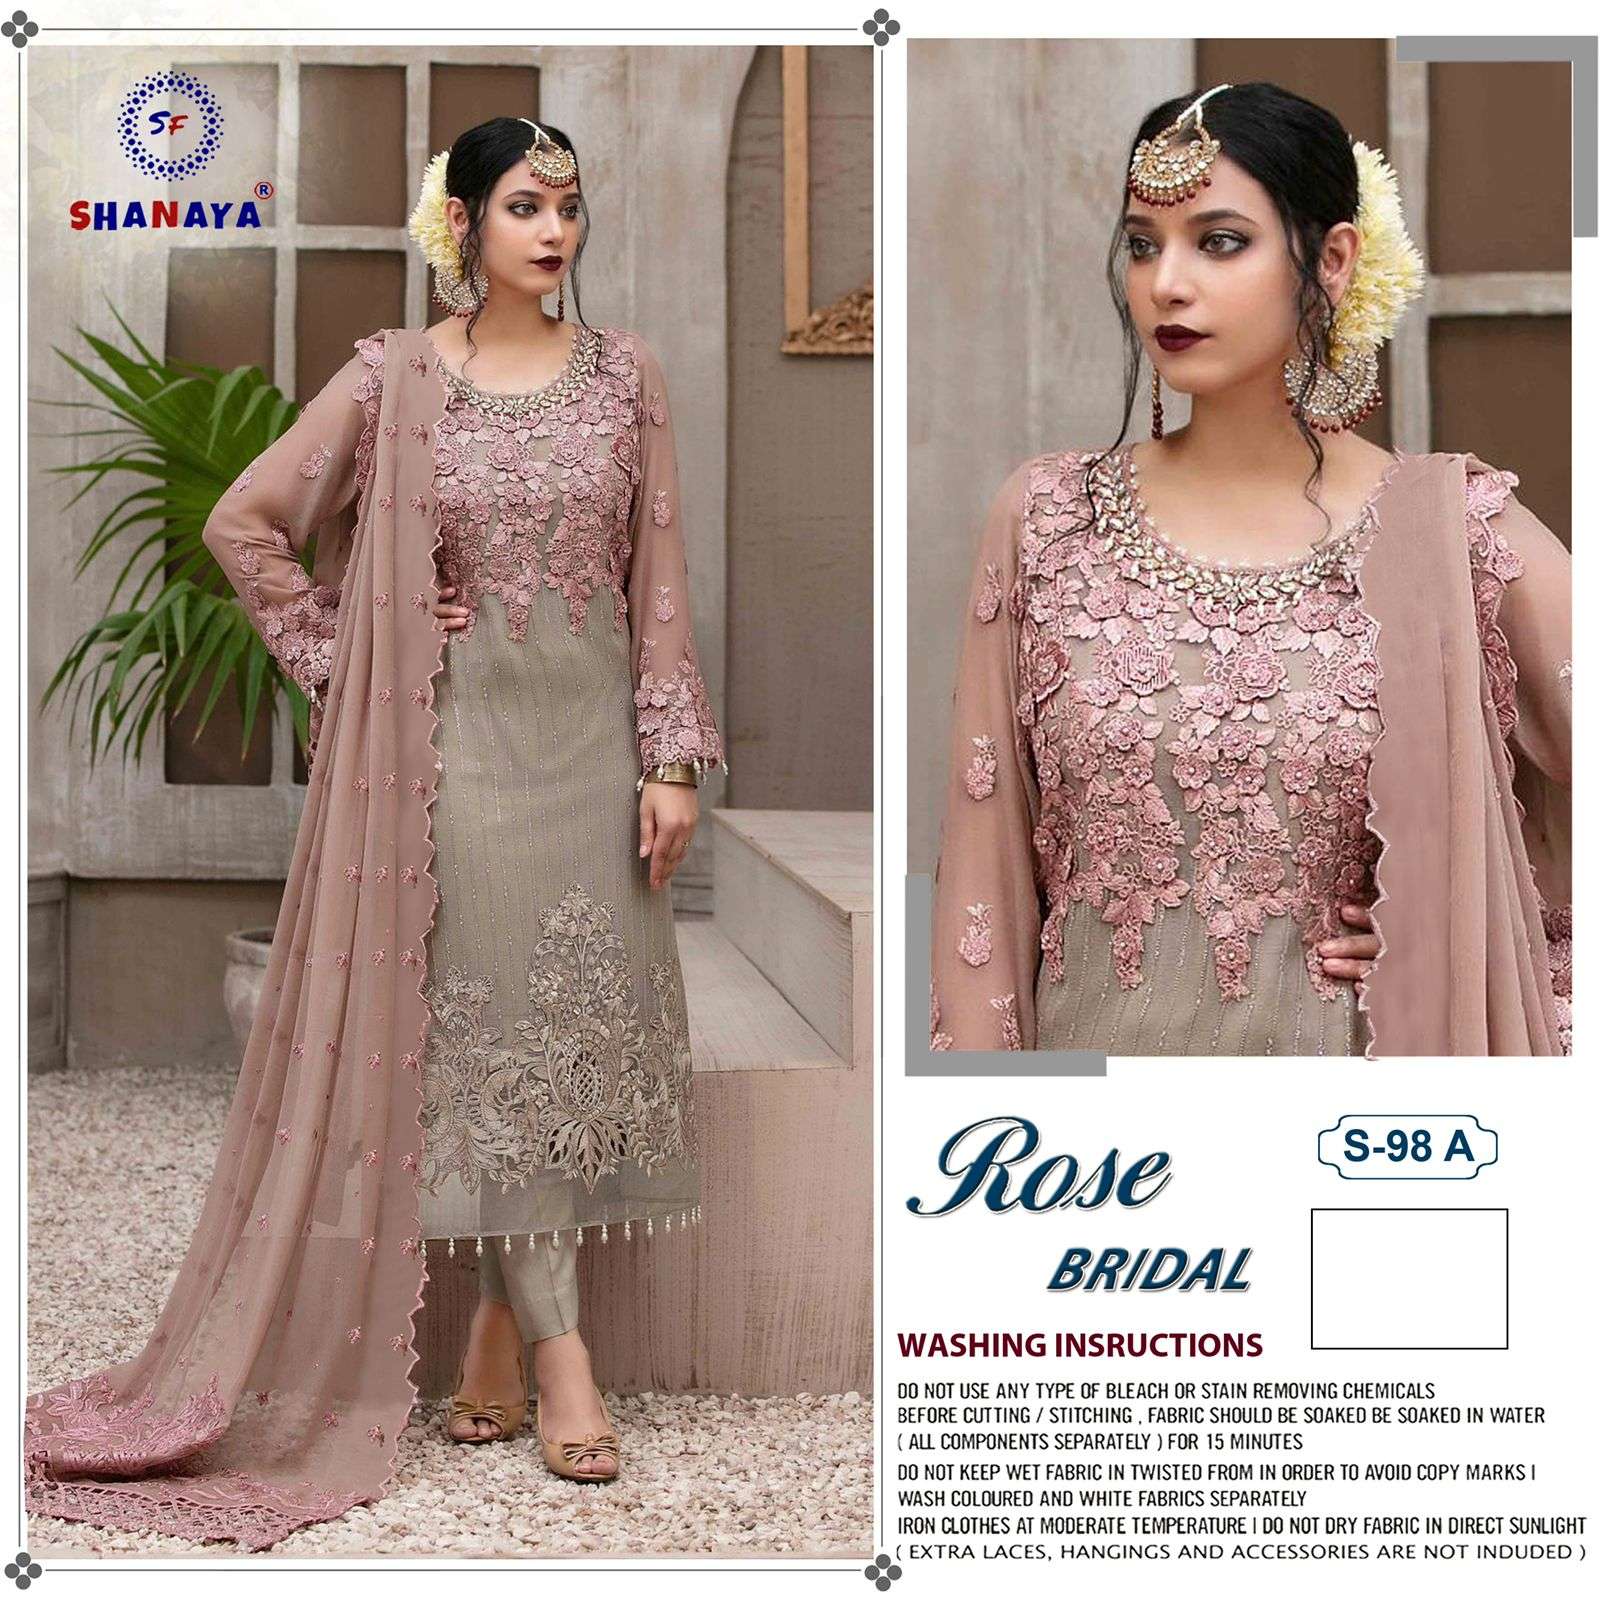 shanaya fashion rose brideal s 98 edition georgette pakistani designer salwar kameez online shopping surat 